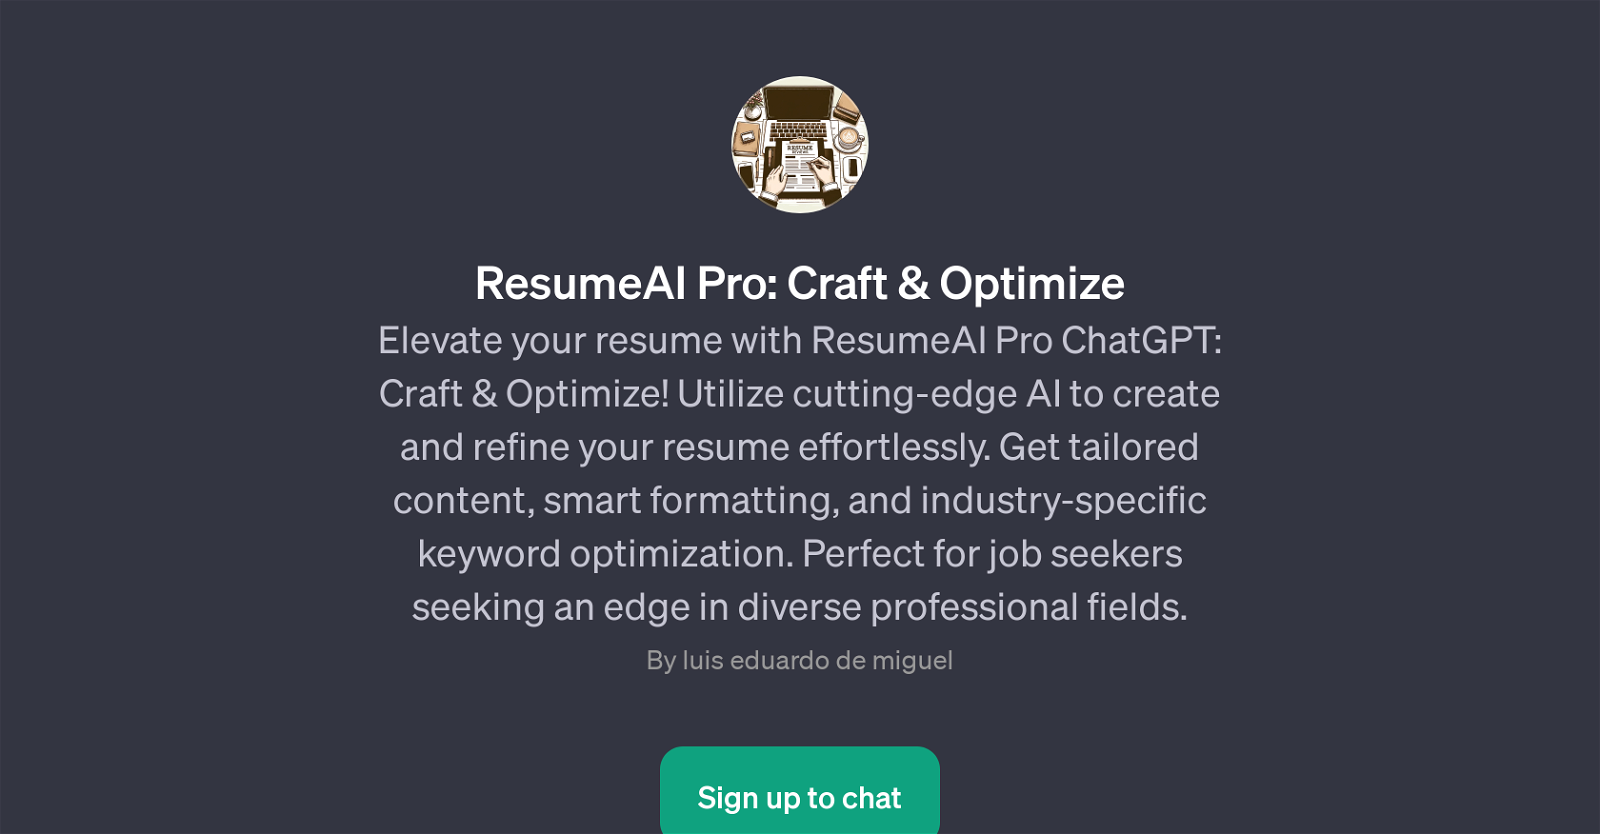 ResumeAI Pro: Craft & Optimize website